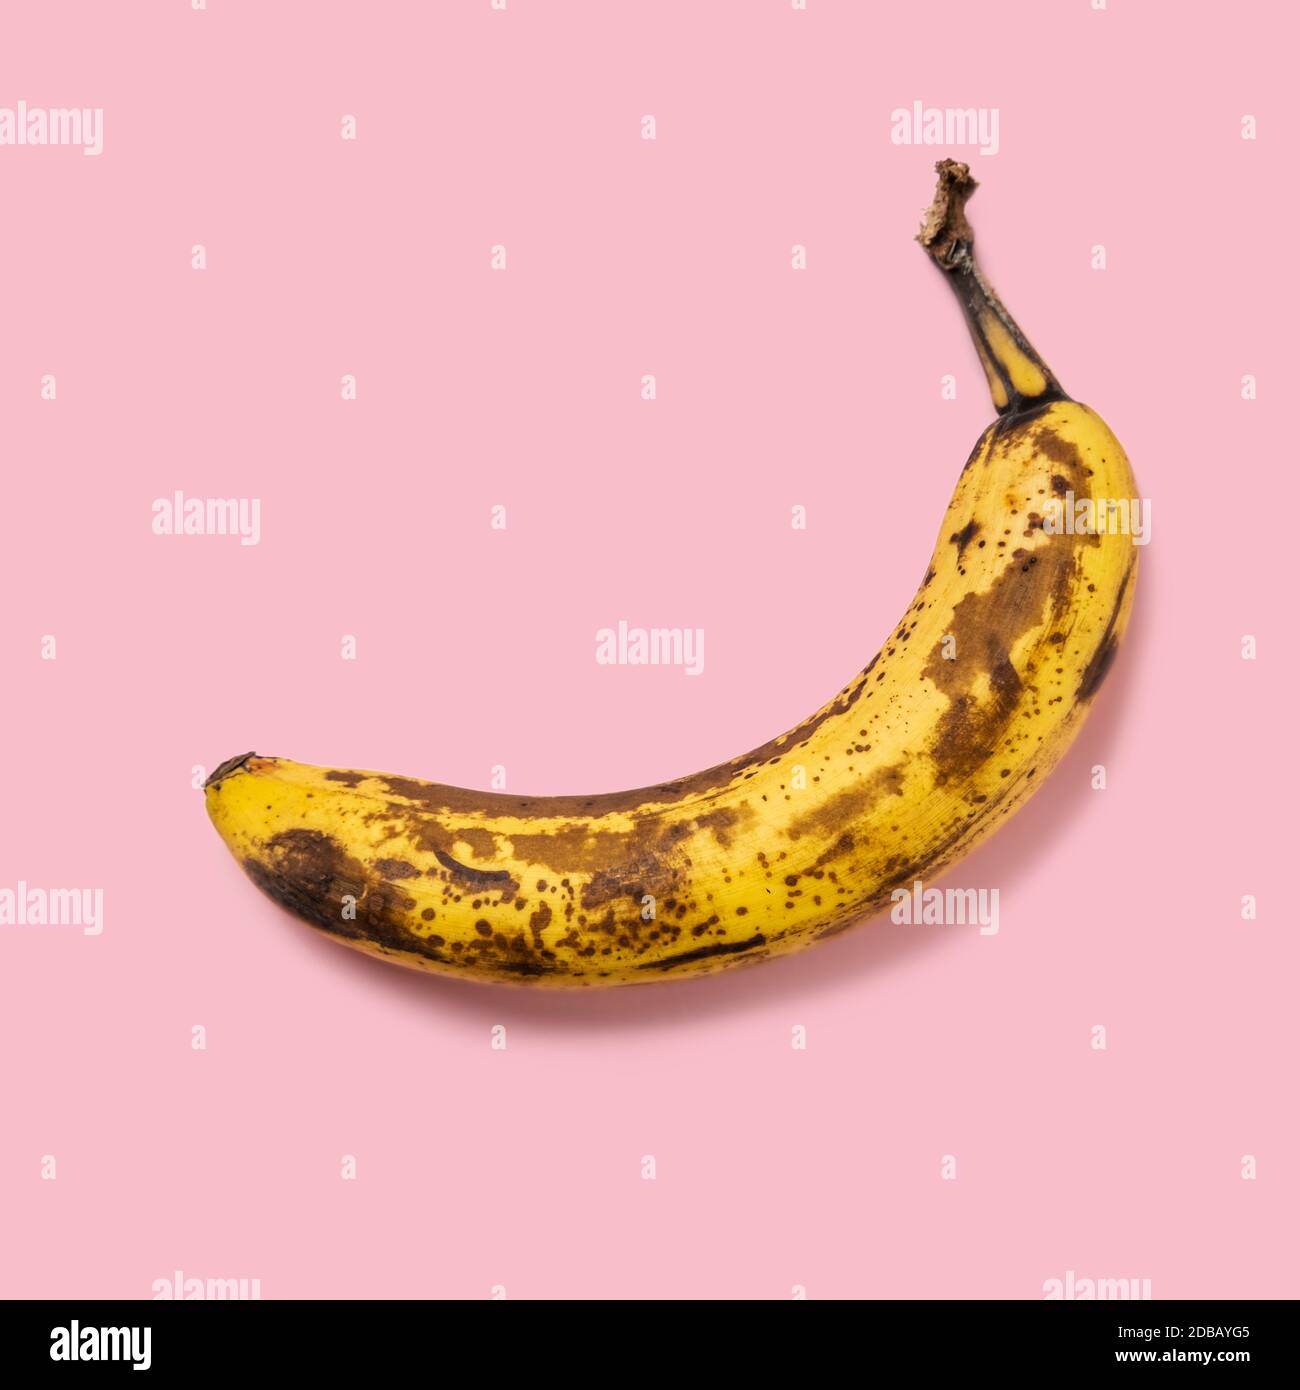 Overripe banana on pink background Stock Photo